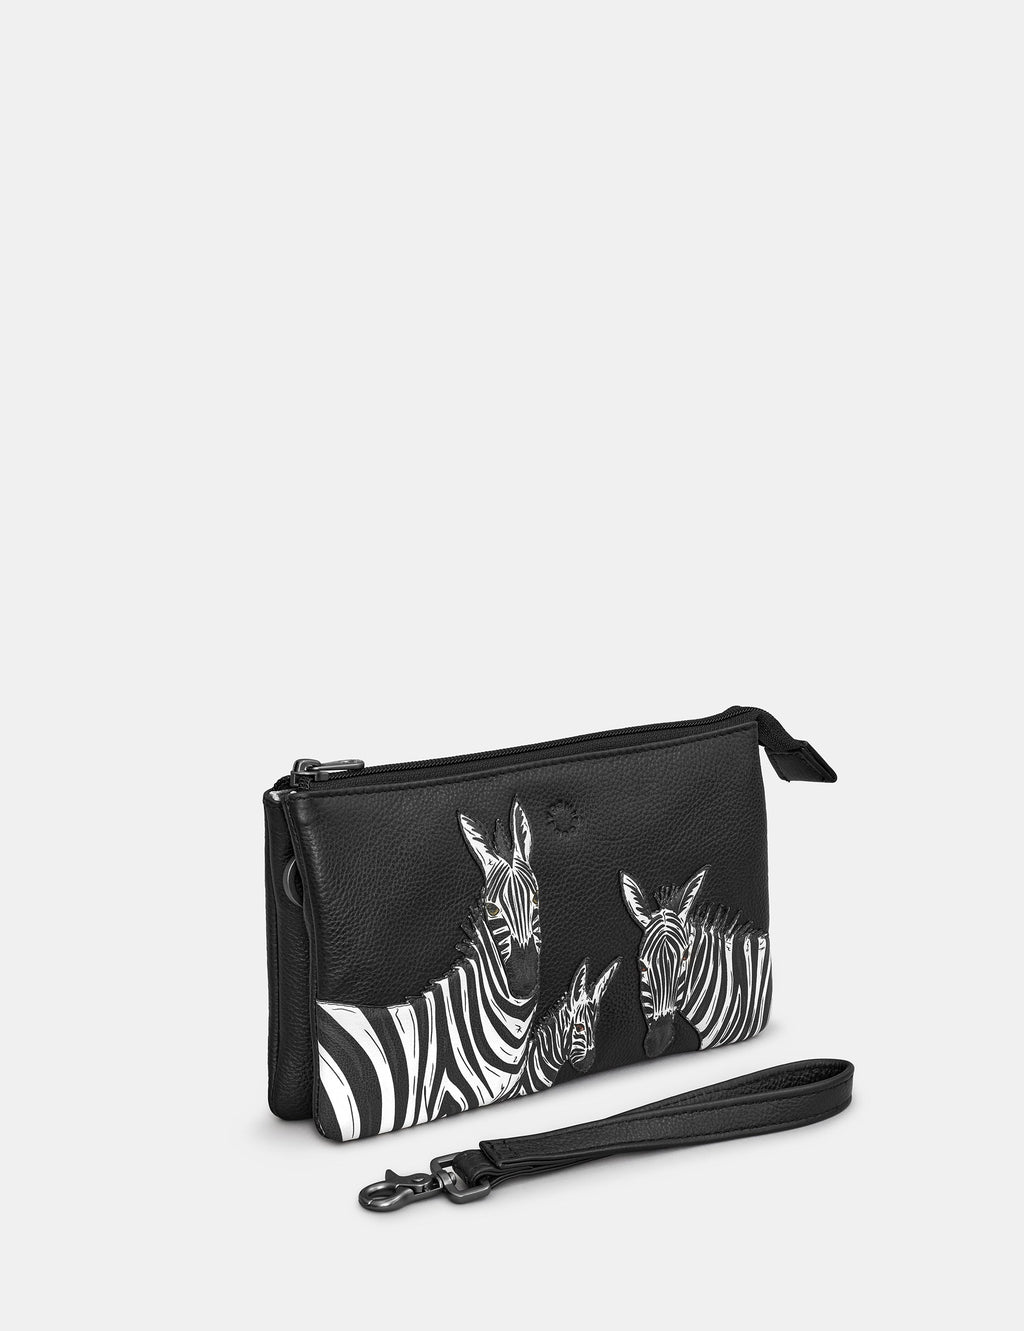 Yoshi - Black Zebra Leather Small Cross Body Bag